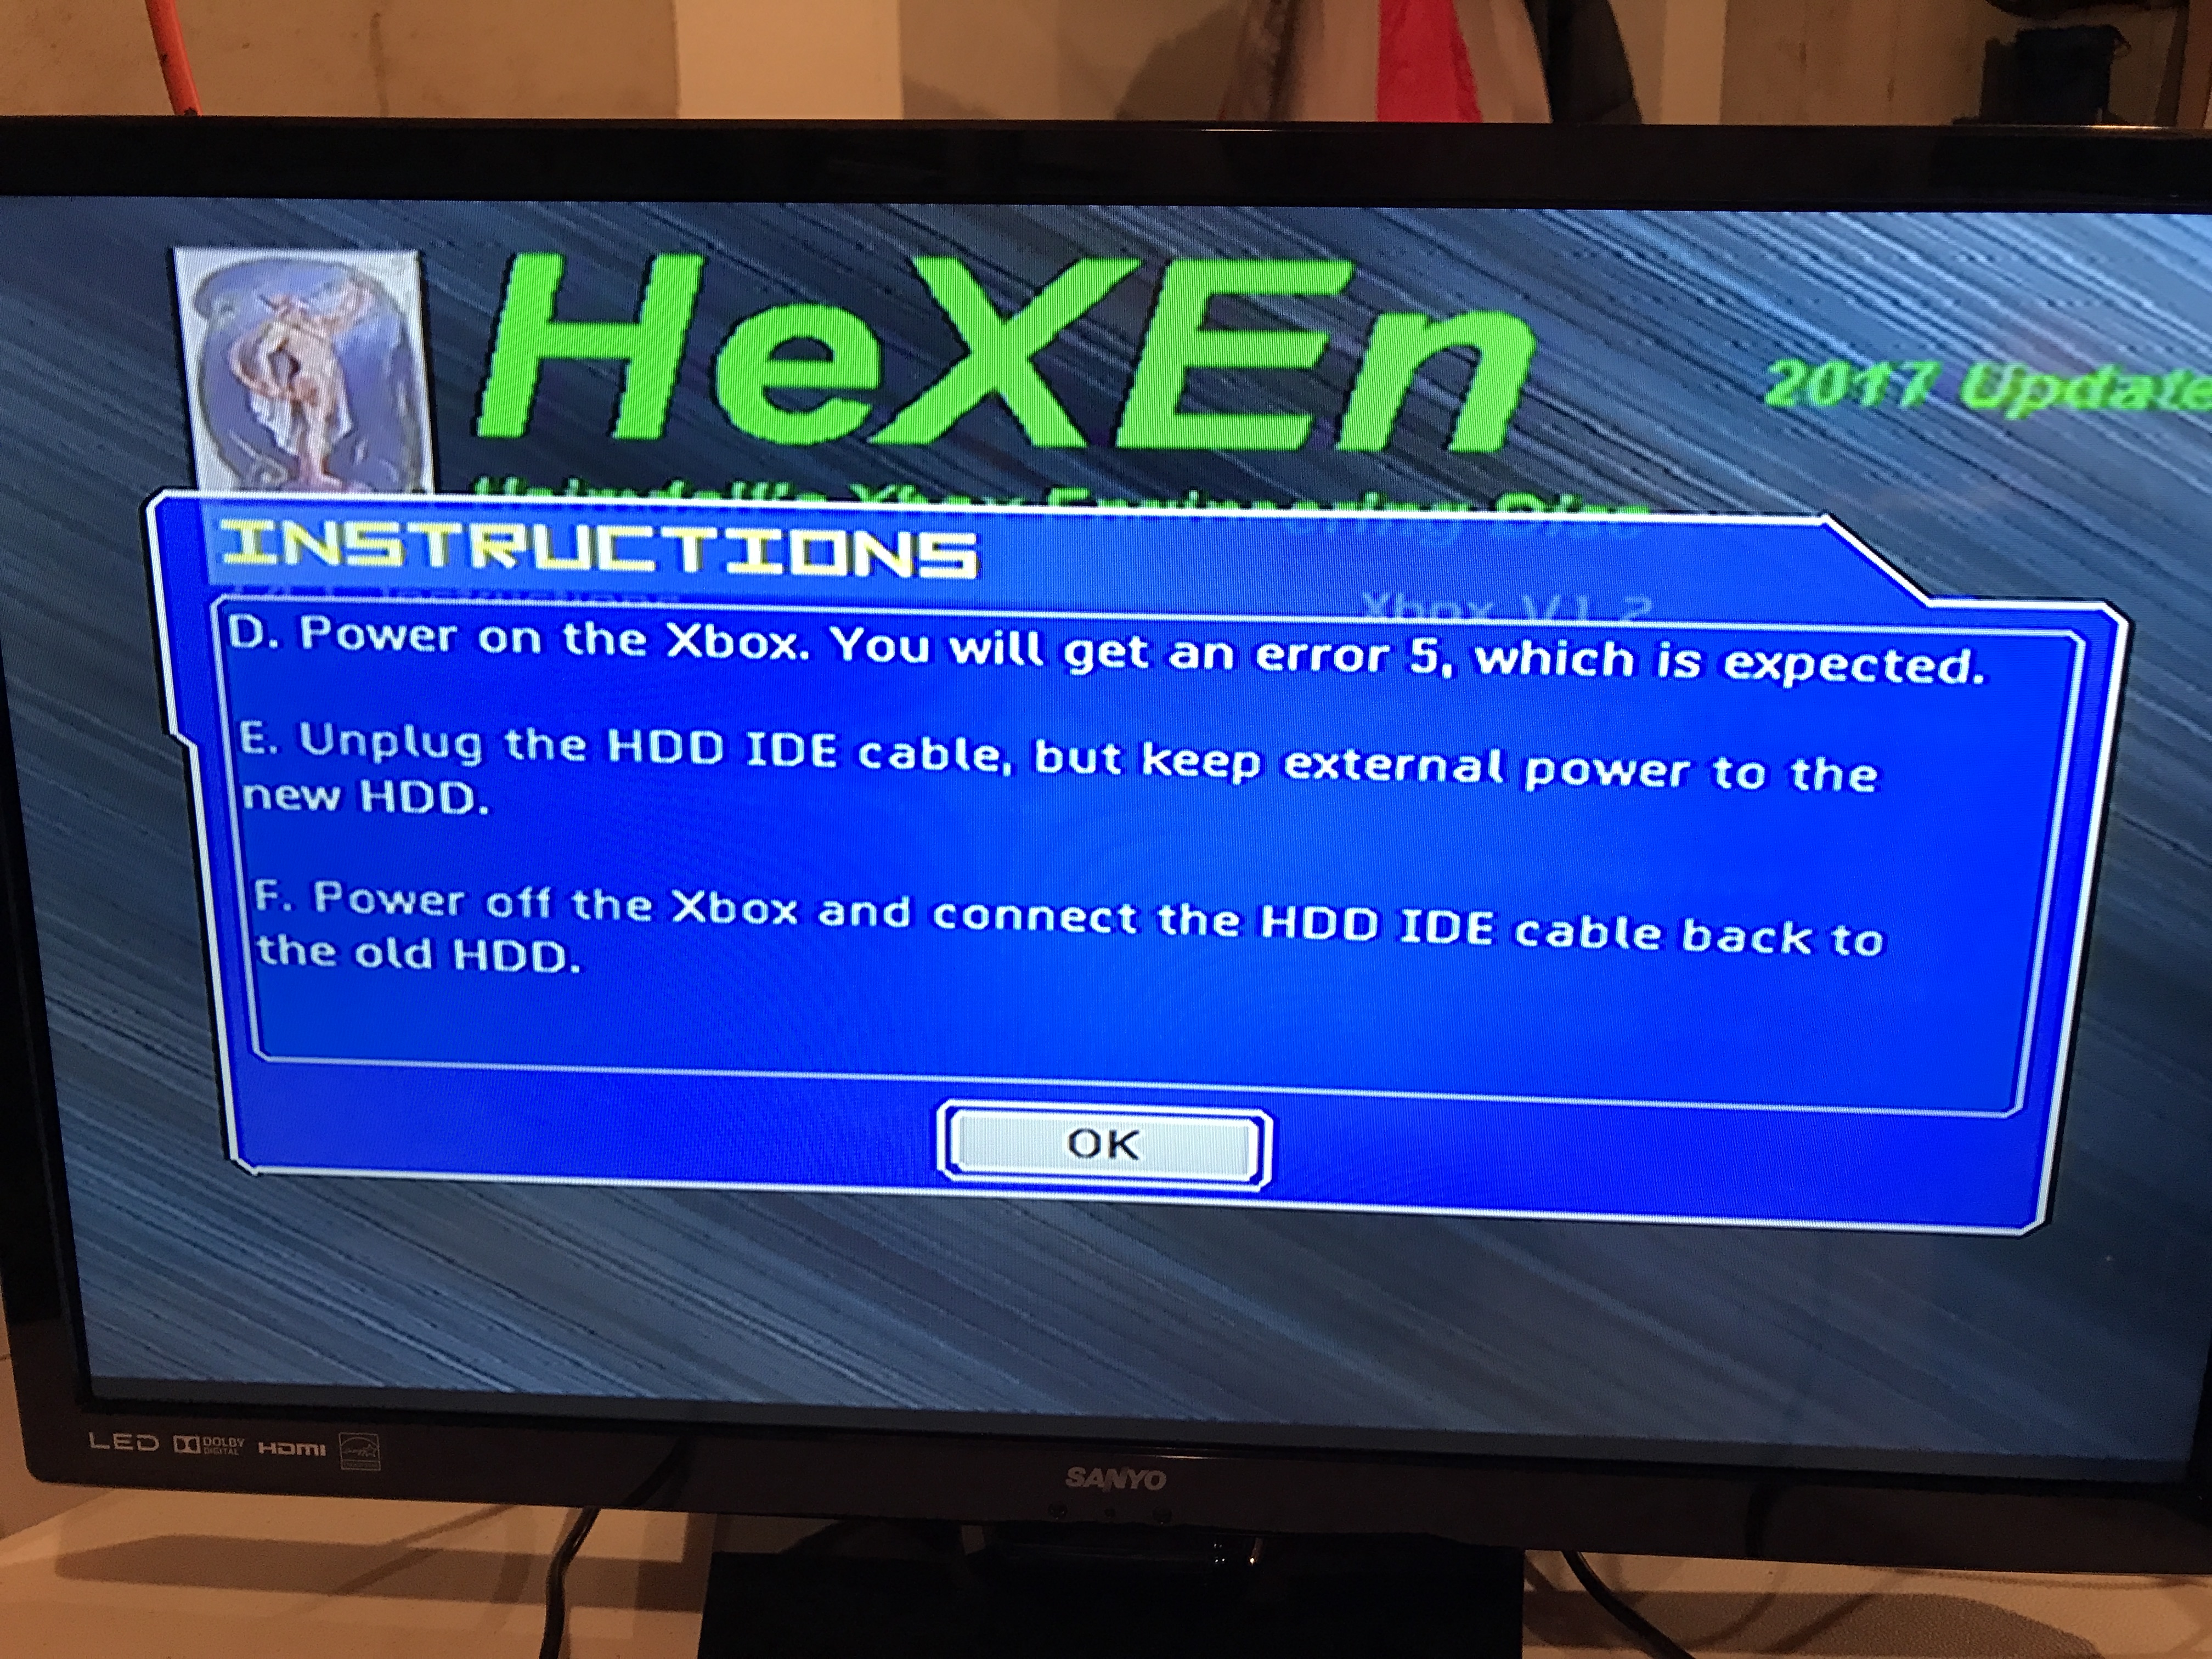 Hexen 2017 xbox one x